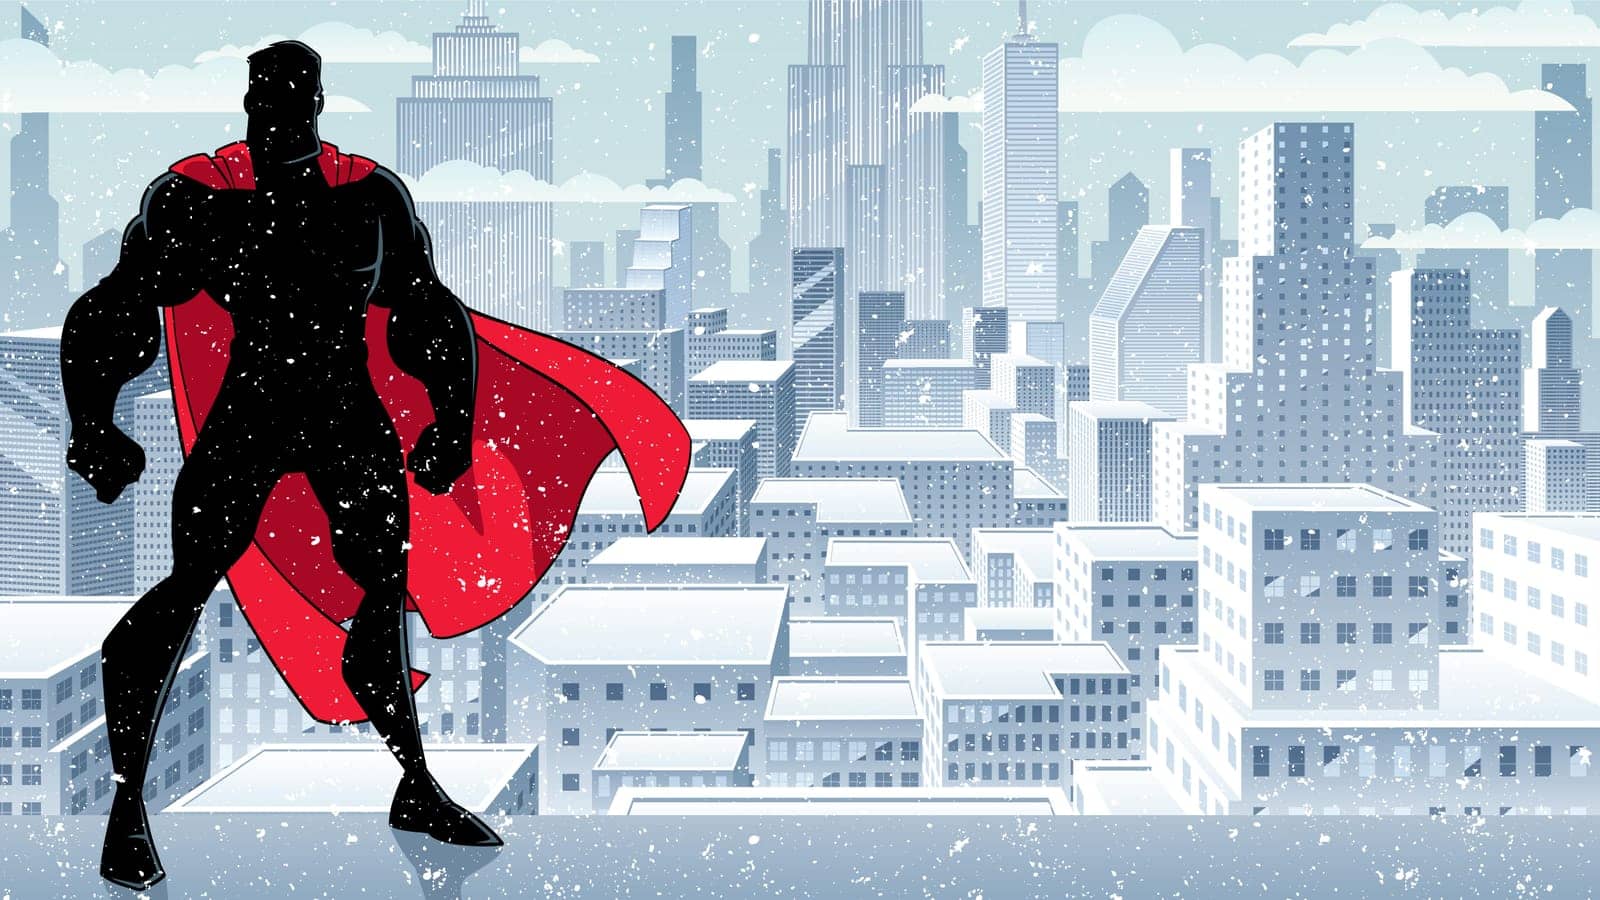 Superhero Standing Tall Winter Silhouette by Malchev